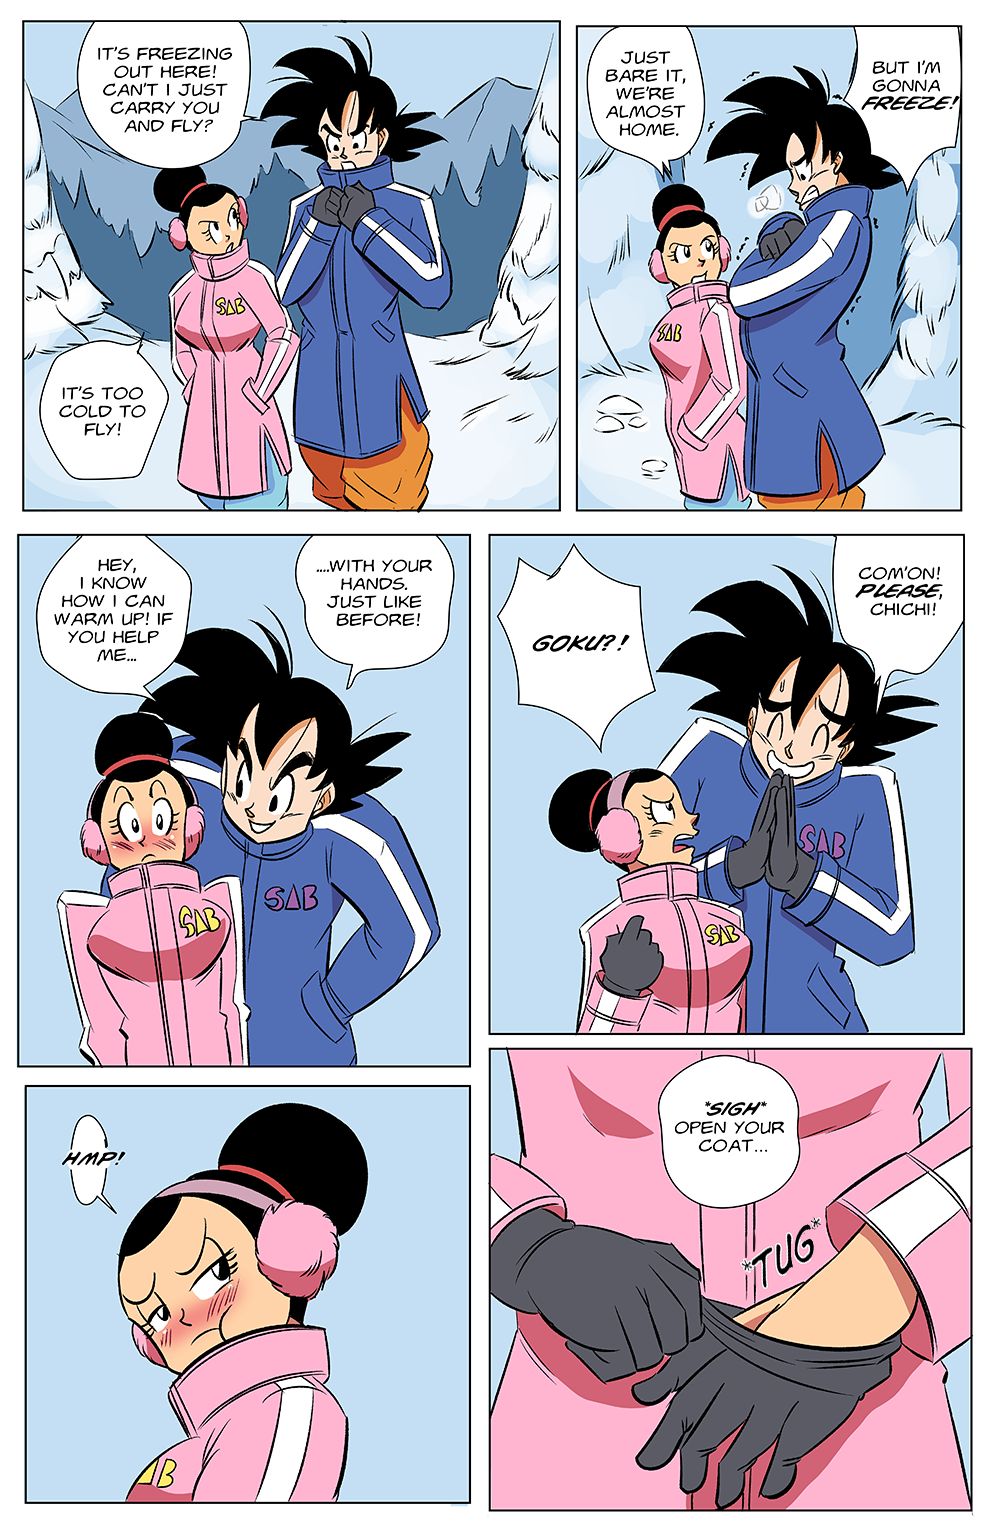 Goku and chichi porn comics